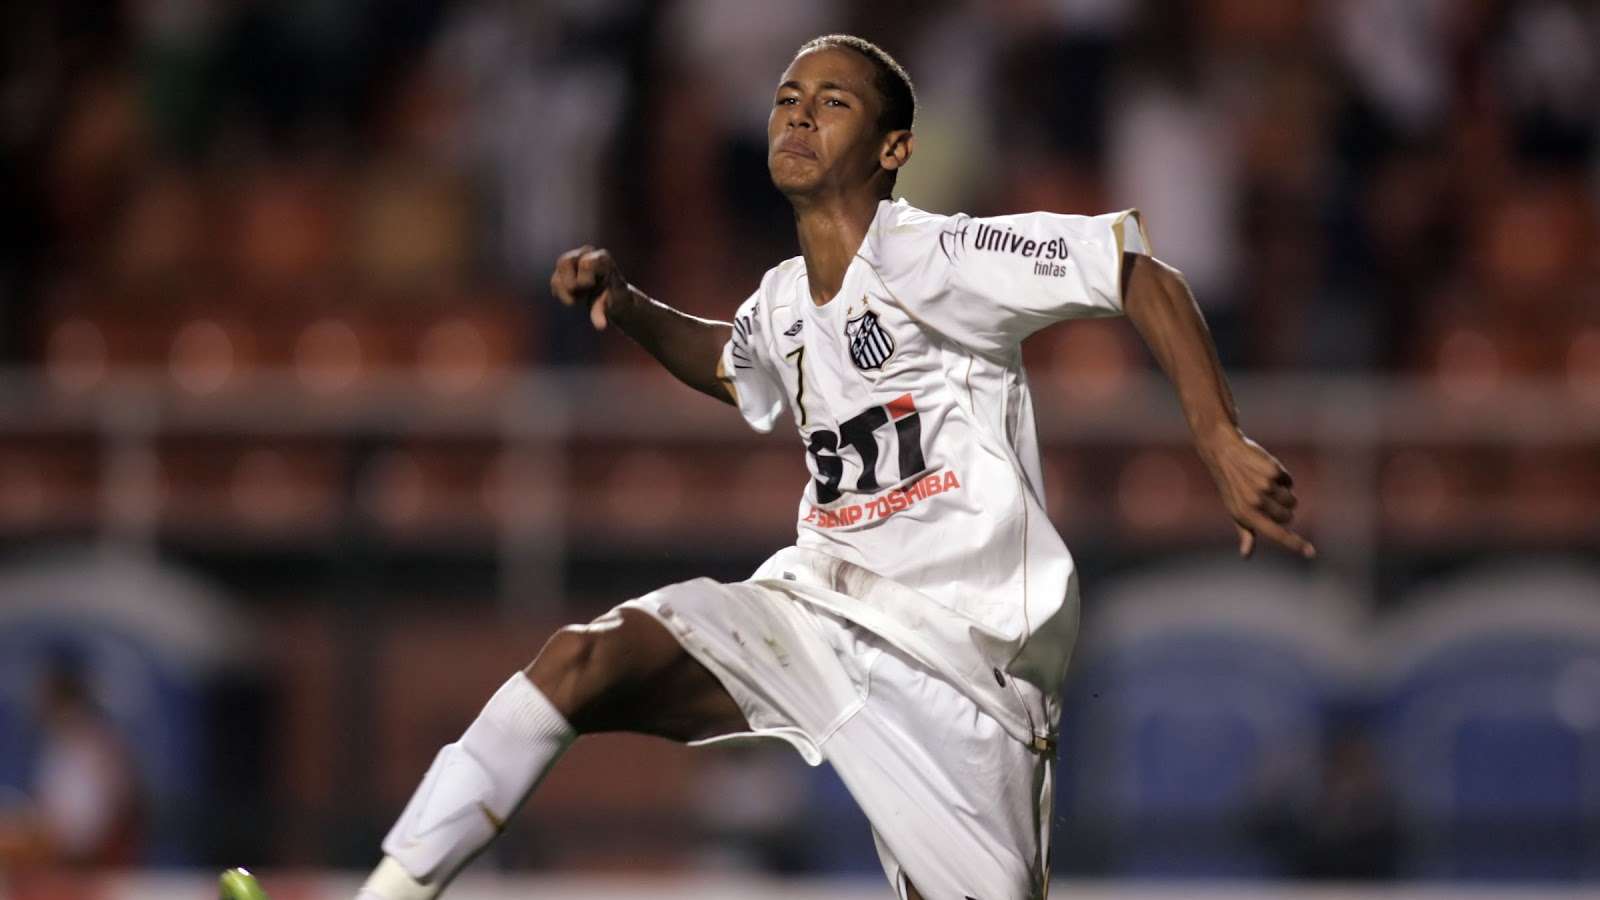 13 years ago Neymar Jr scored his first goal as a professional player | Neymar  Jr.